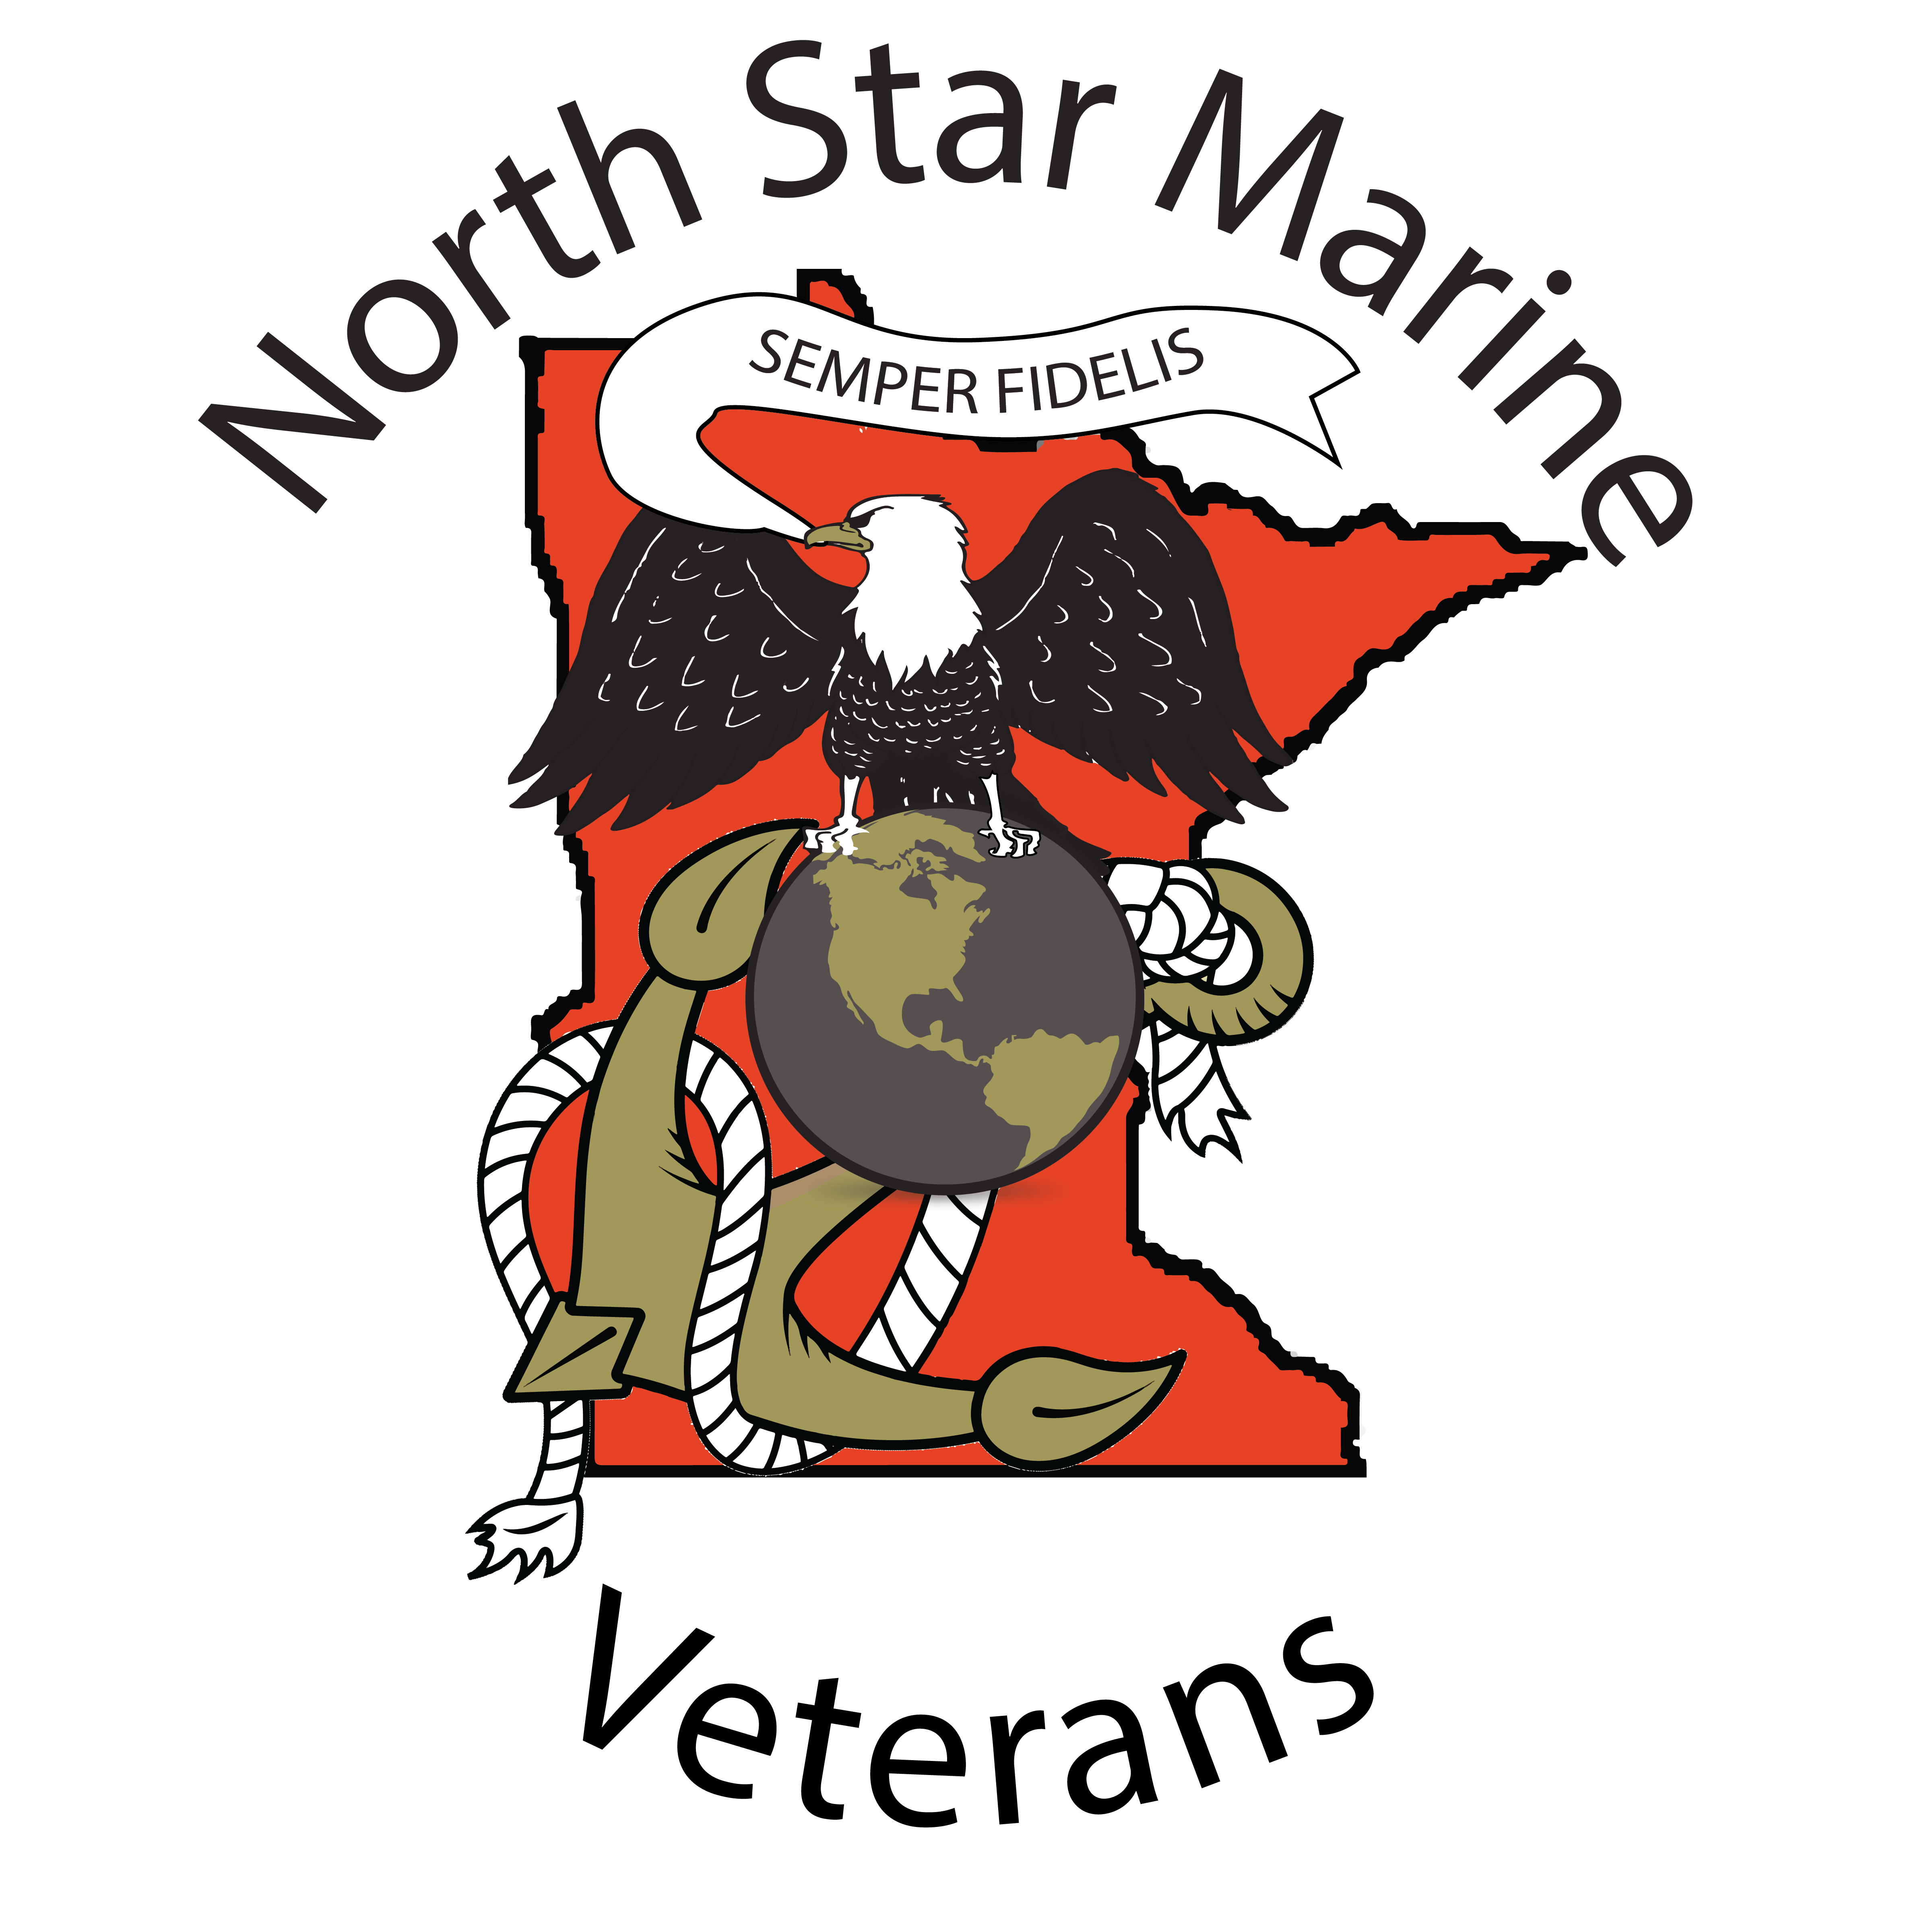 North Star Marine Veterans